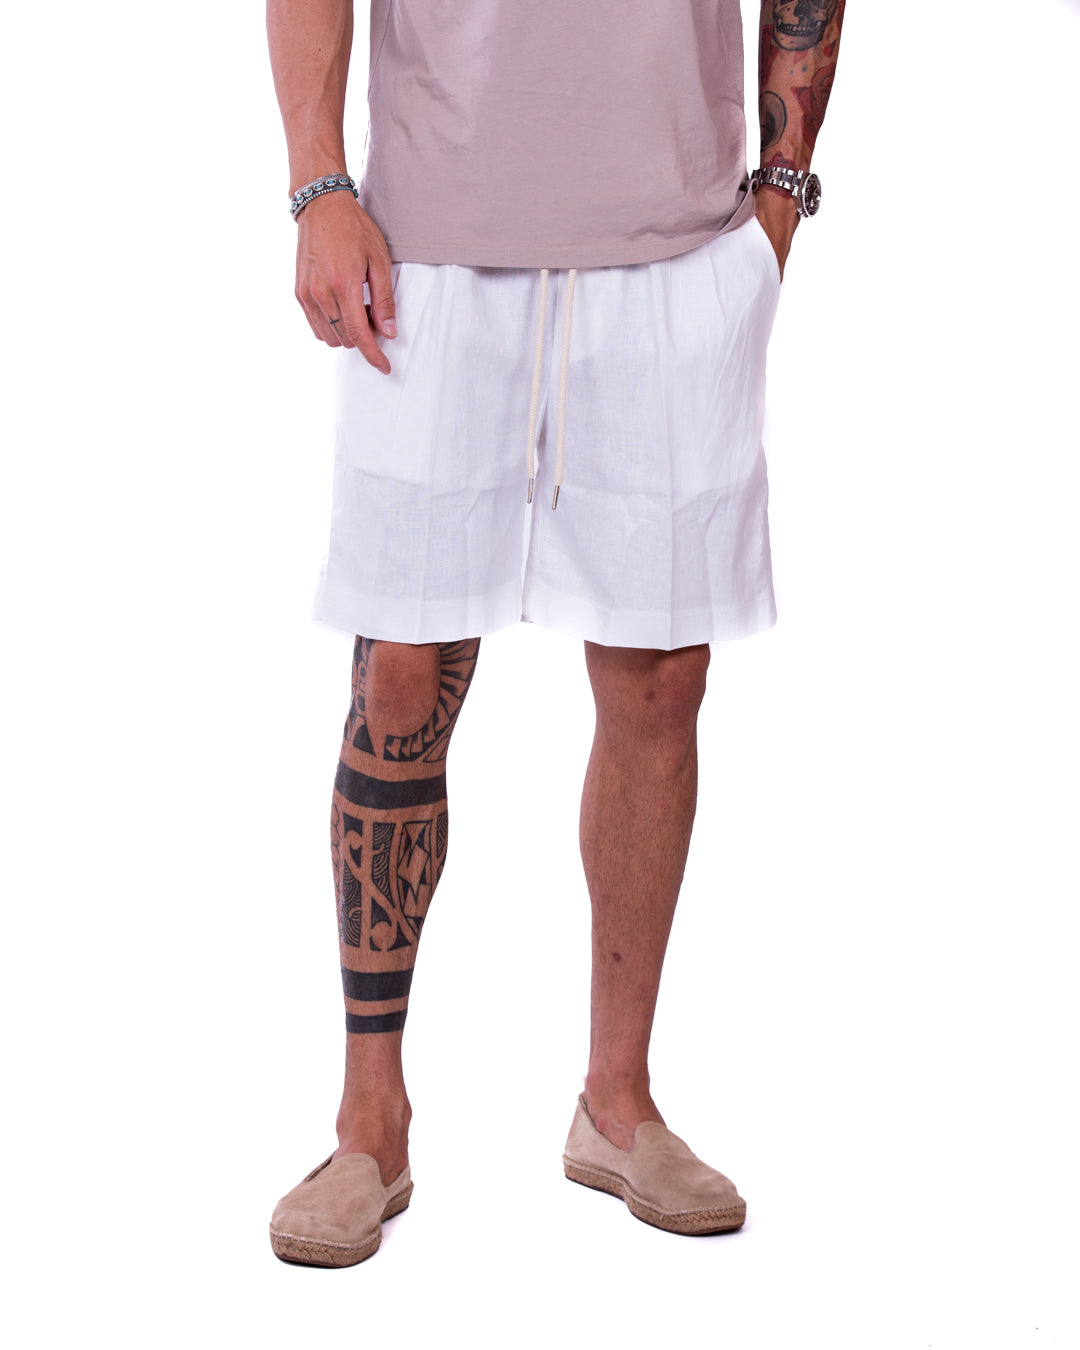 Larry - white linen Bermuda shorts